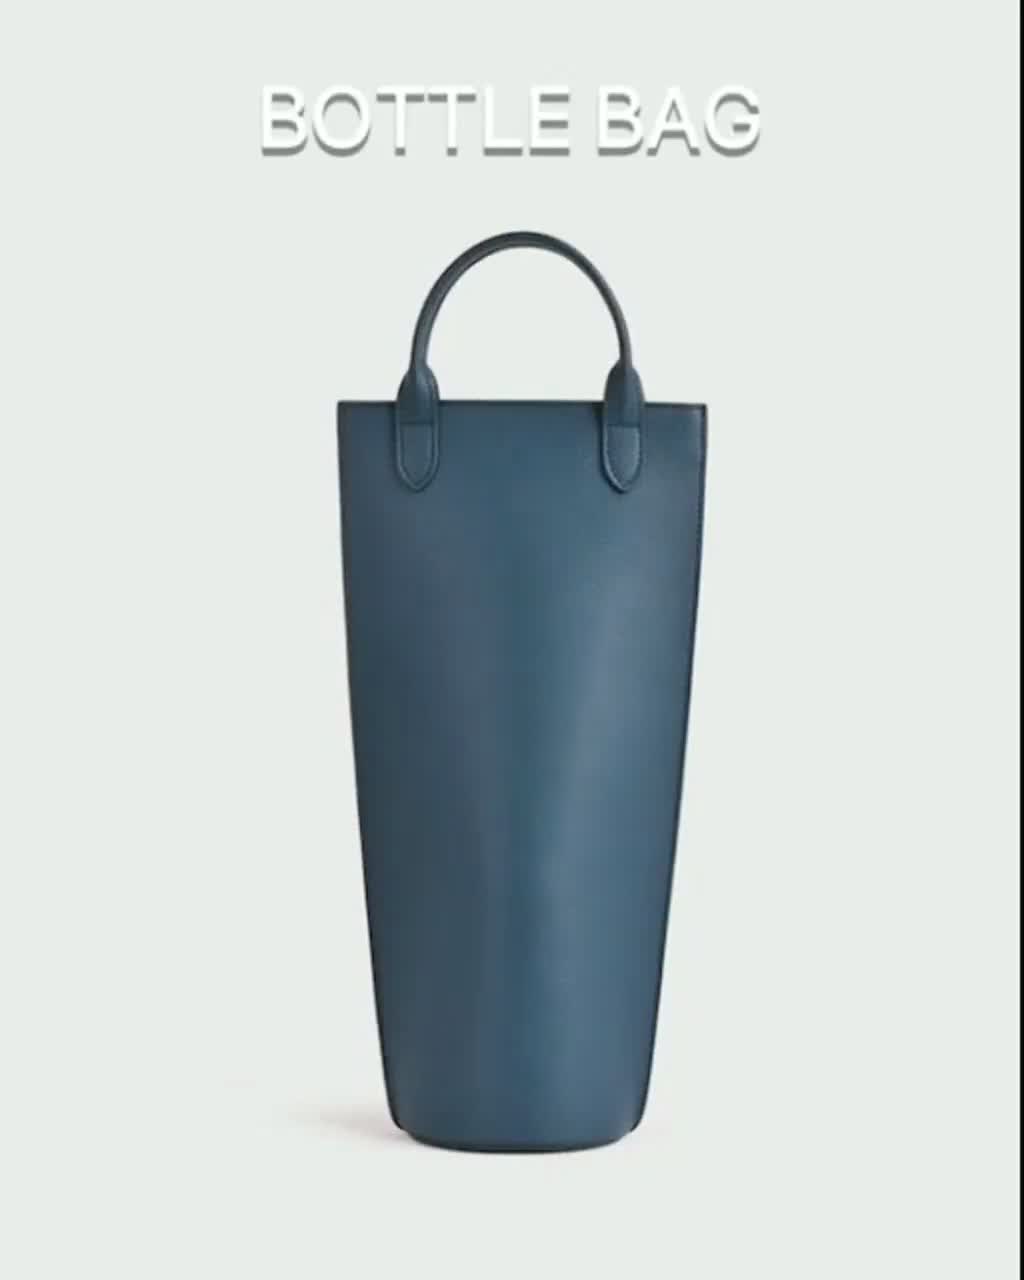 tocco-toscano-กระเป๋าหนังใส่ขวดไวน์-bottle-bag-wine-bag